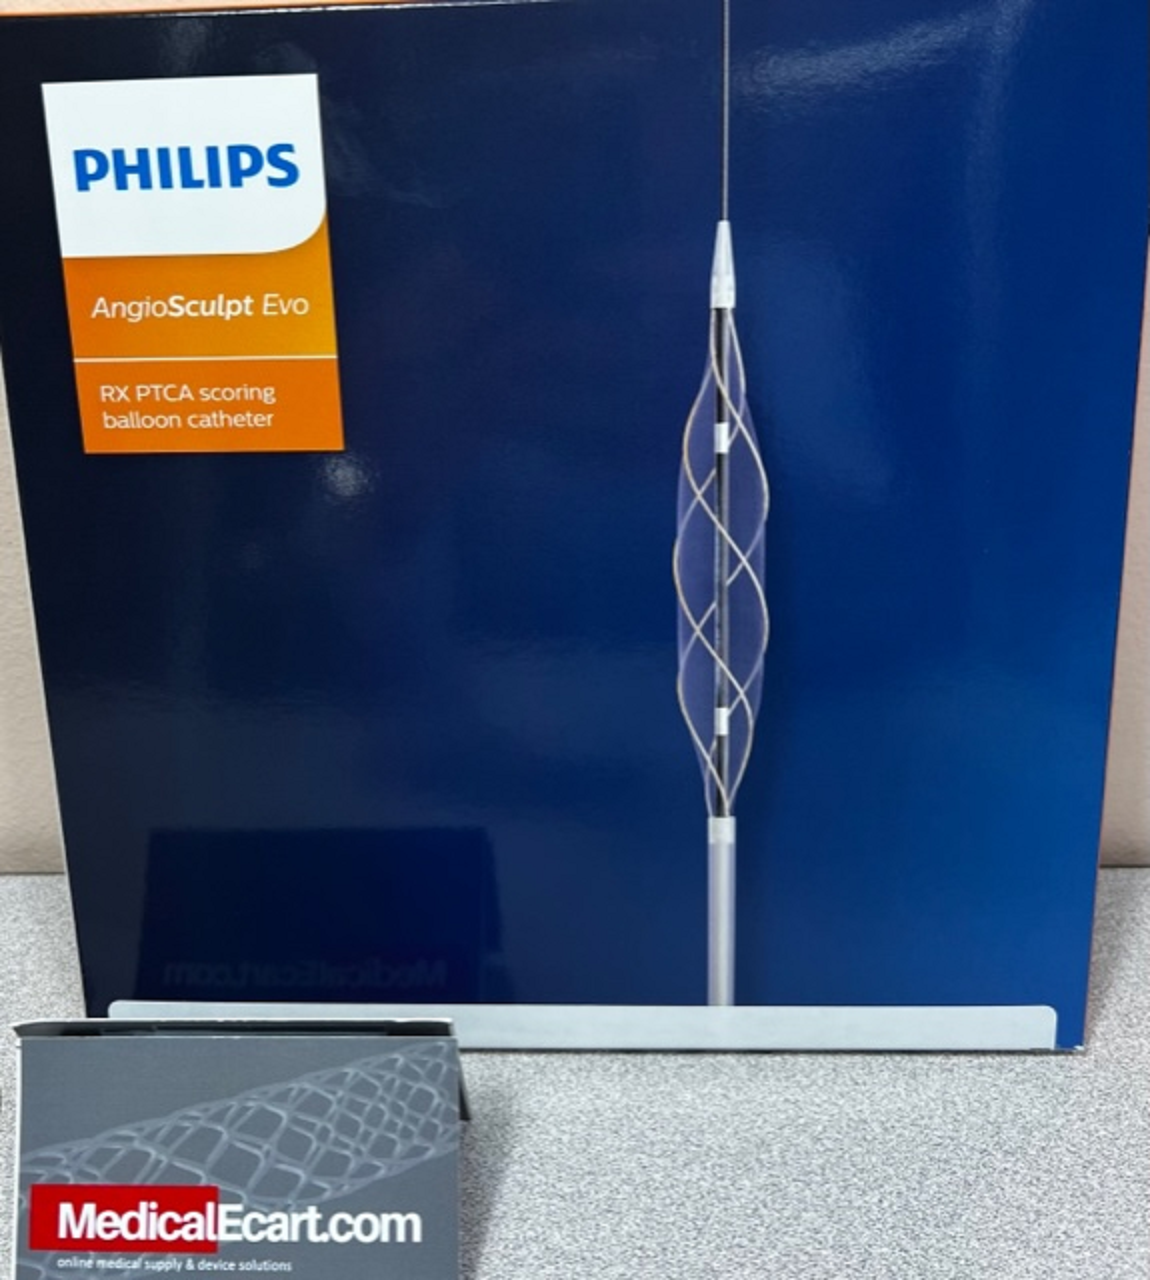 Philips 2200-3515-B AngioSculpt Evo RX PTA scoring Balloon Catheter